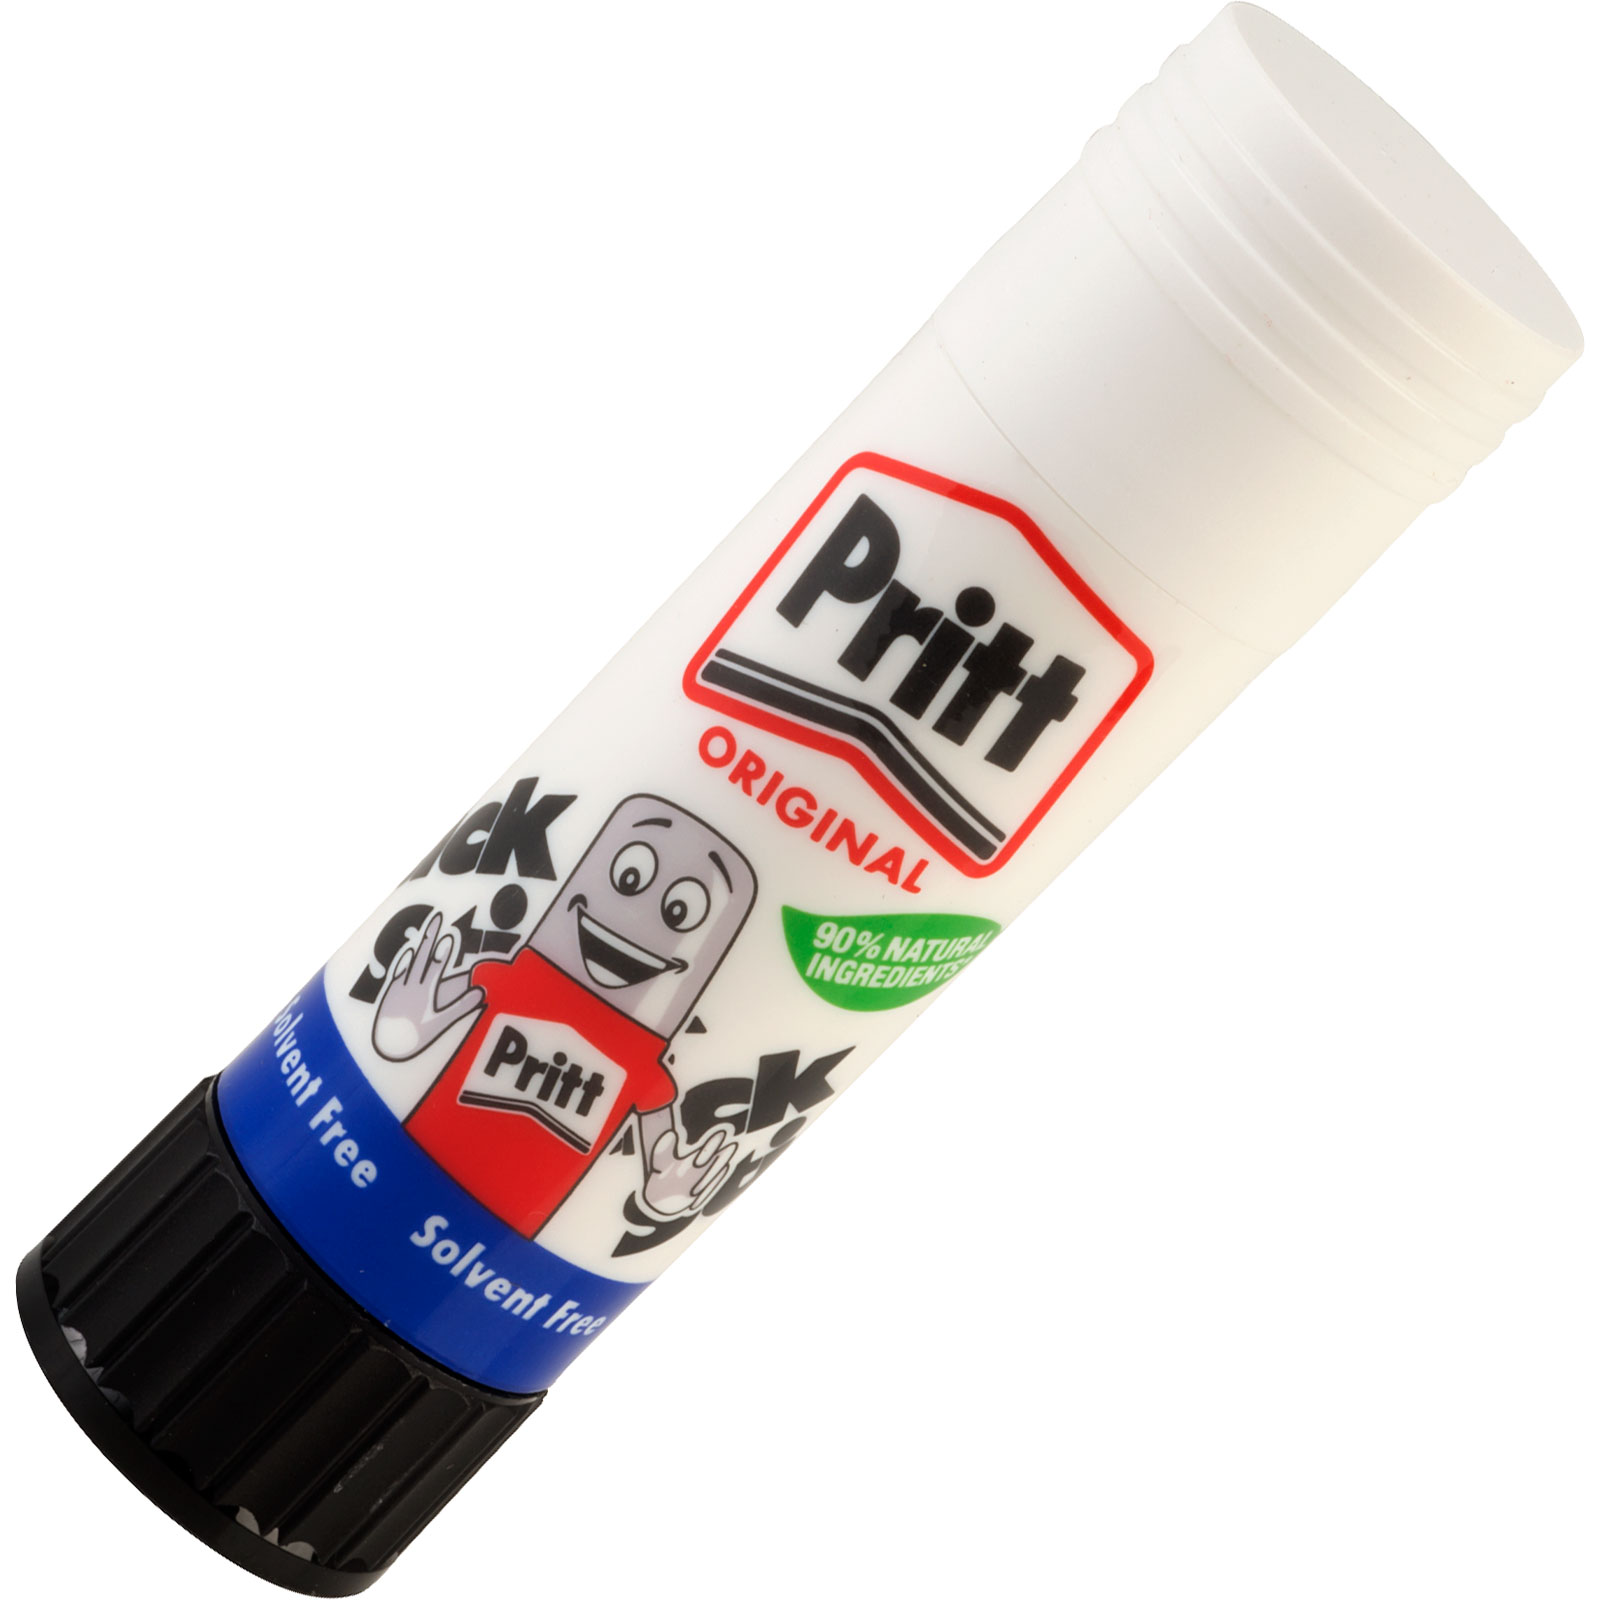 Buy PRITT Glue stick (22 g) cheaply